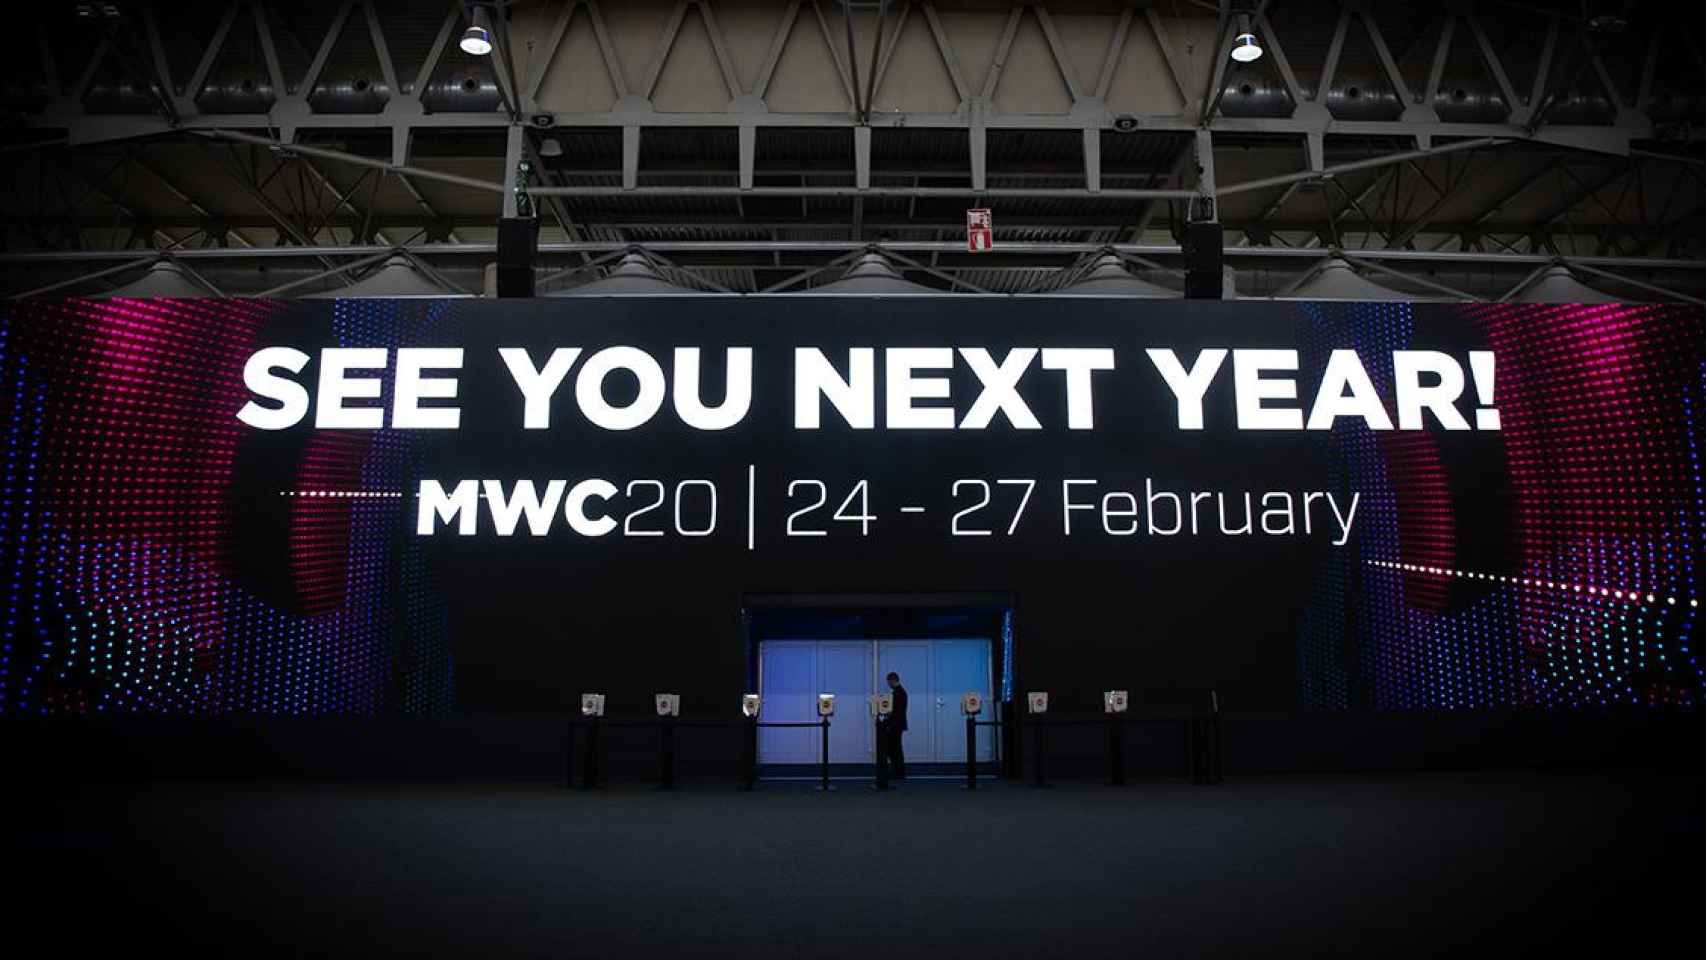 Detalle del cartel de despedida del Mobile World Congress Barcelona - MWC 2019 / EP